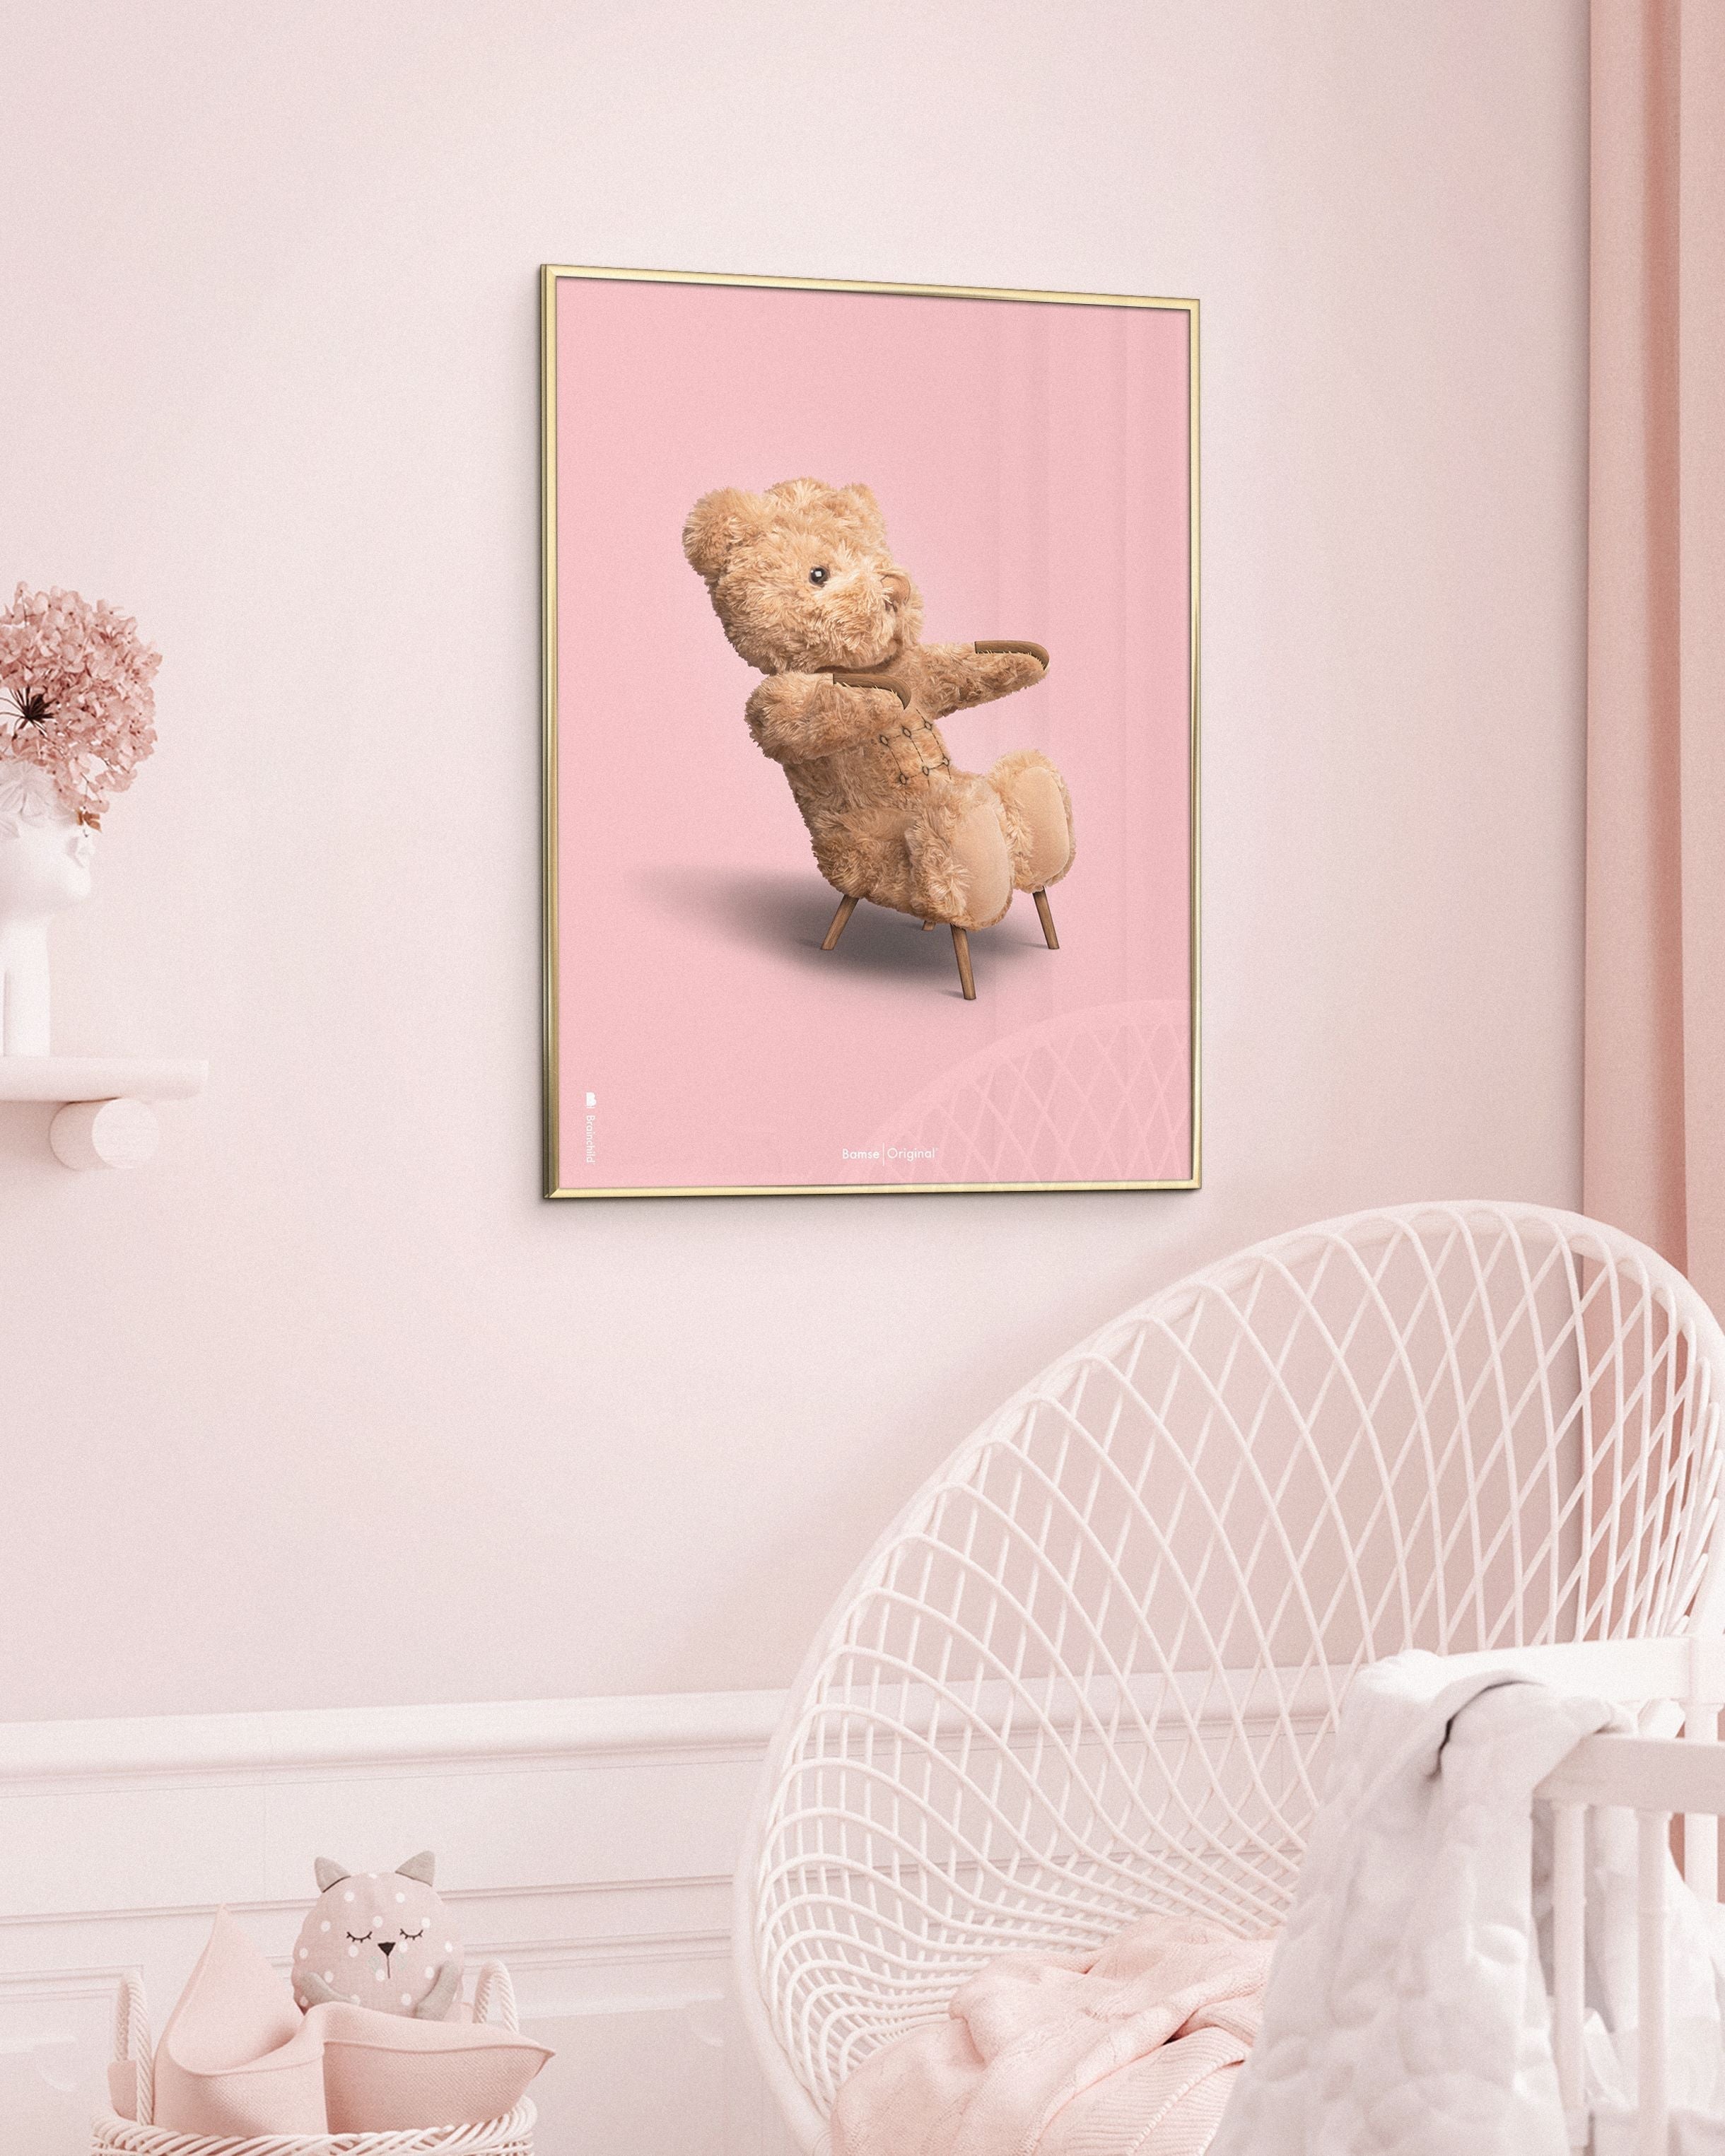 Brainchild Nallebjörn klassisk affischram i mörk träram 30x40 cm, rosa bakgrund